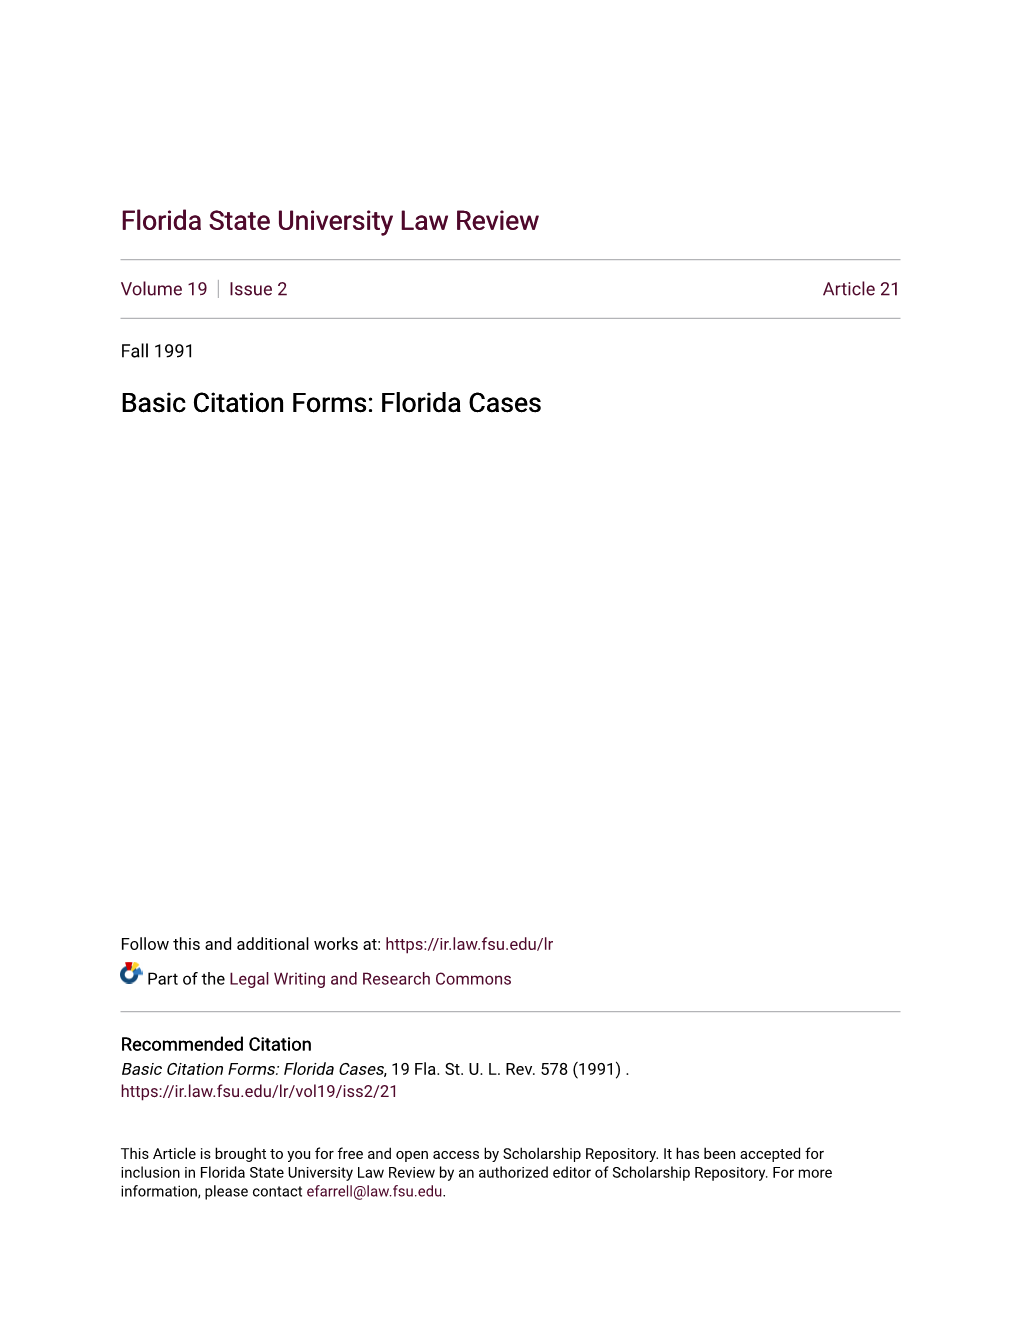 Basic Citation Forms: Florida Cases